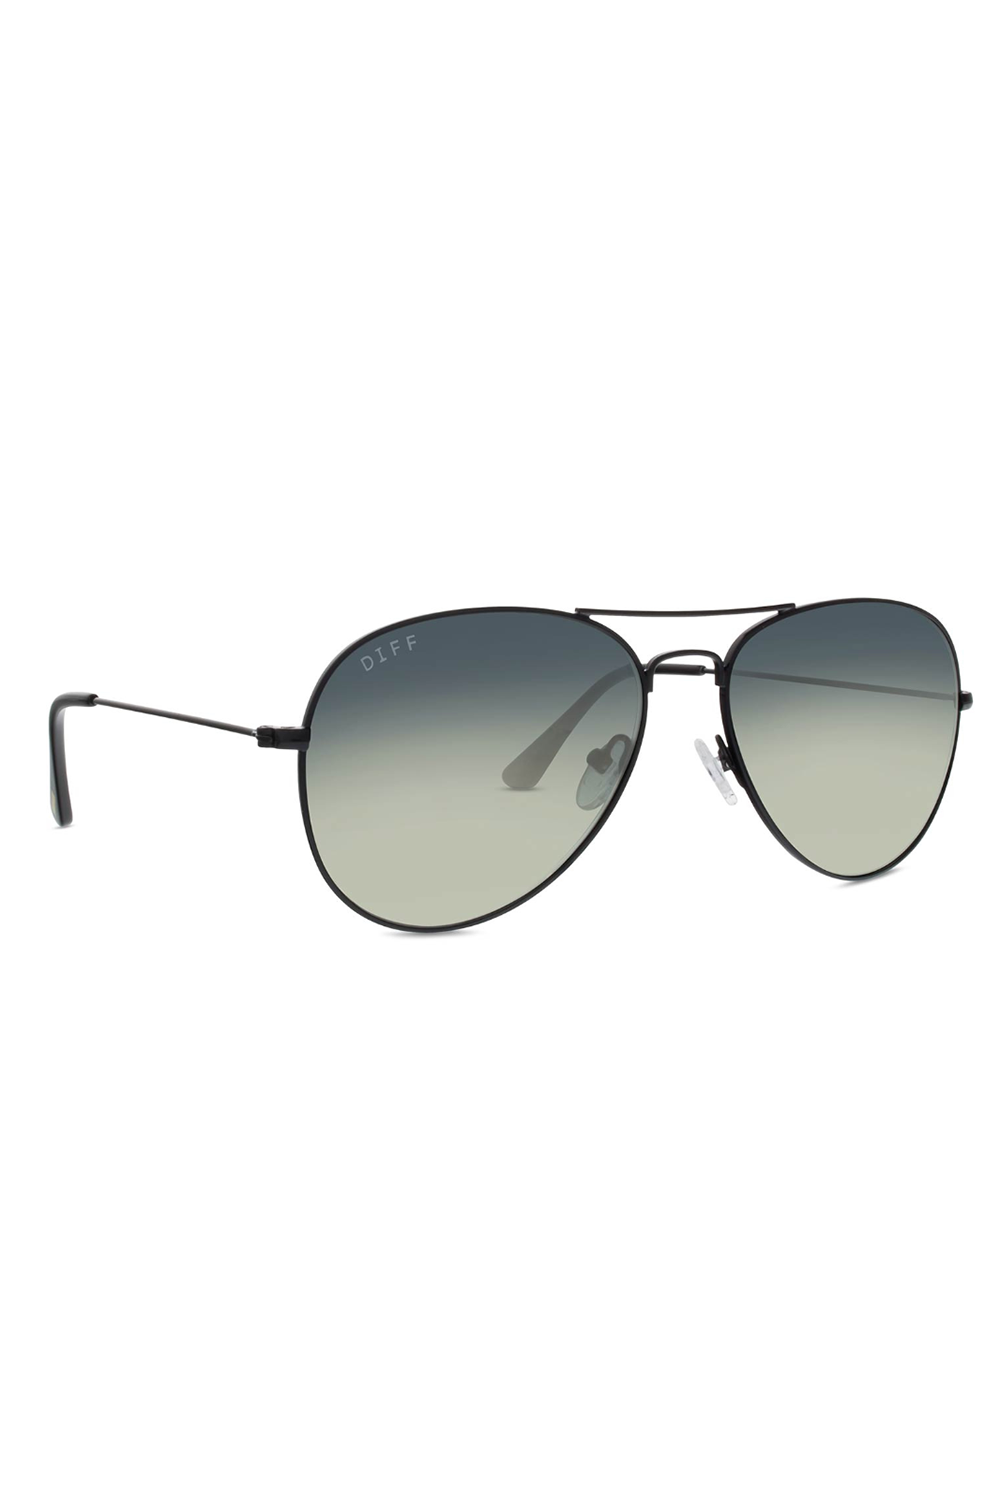 Cruz Sunglasses - Black Grey